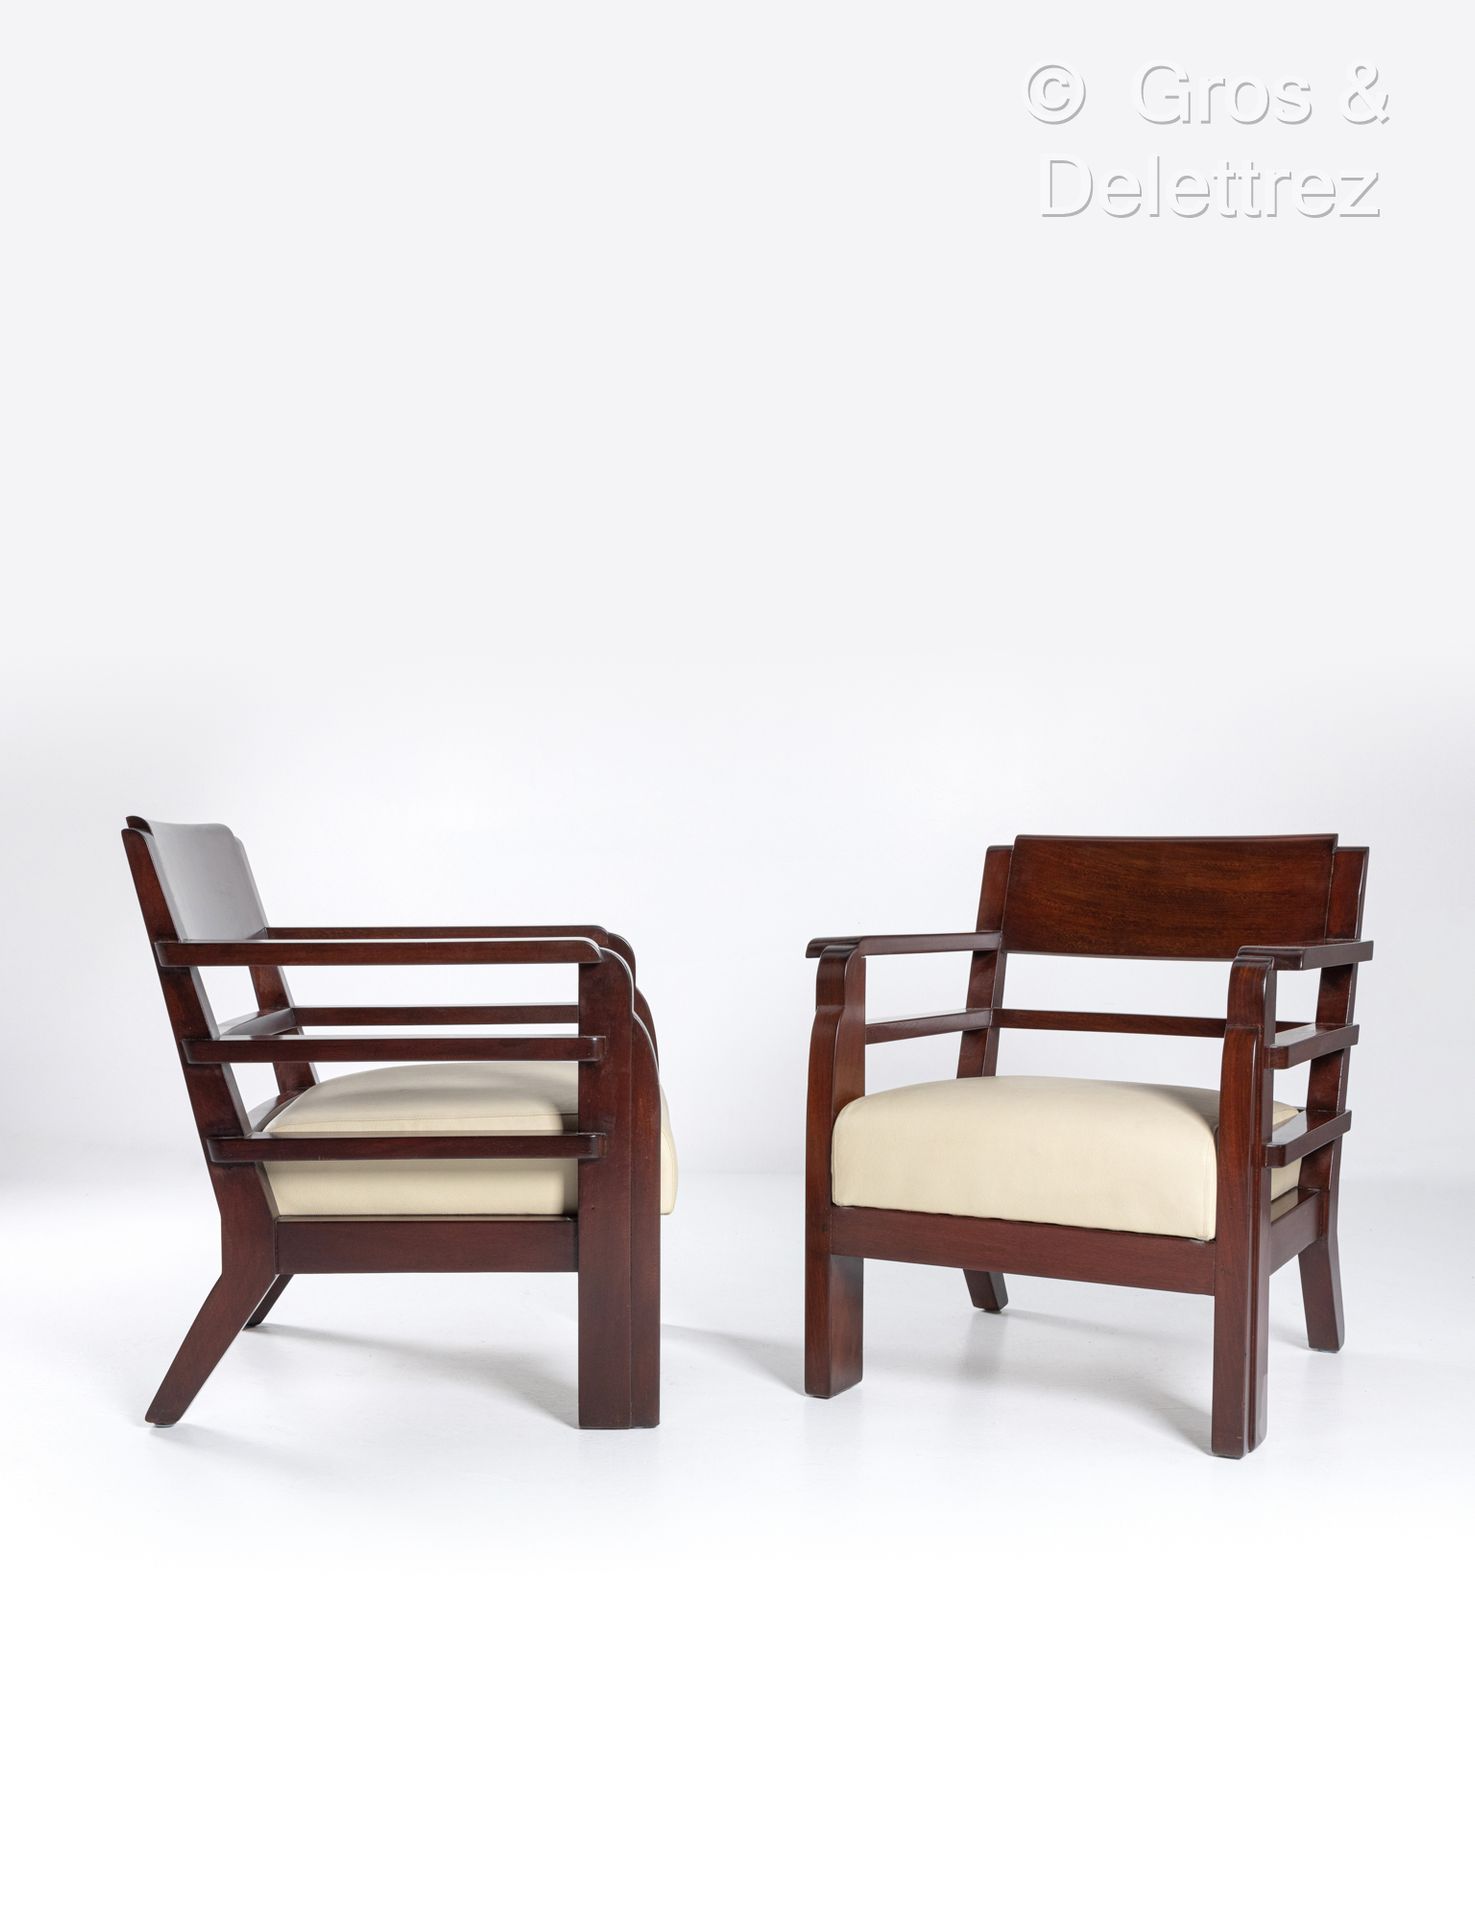 Null 多米尼克宫
安德烈-多明 (1883-1962) 马塞尔-热内维尔 (1885-1967)
一对着色的桃花心木扶手椅，略微弯曲的带状椅背，平坦的扶手和&hellip;